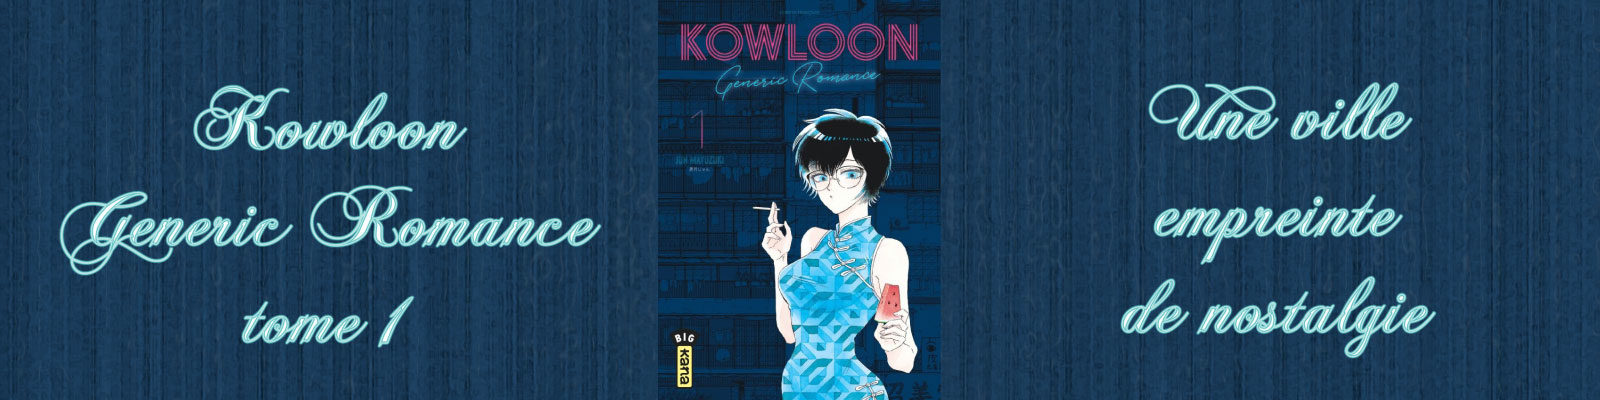 Kowloon Generic Romance-Vol.-1